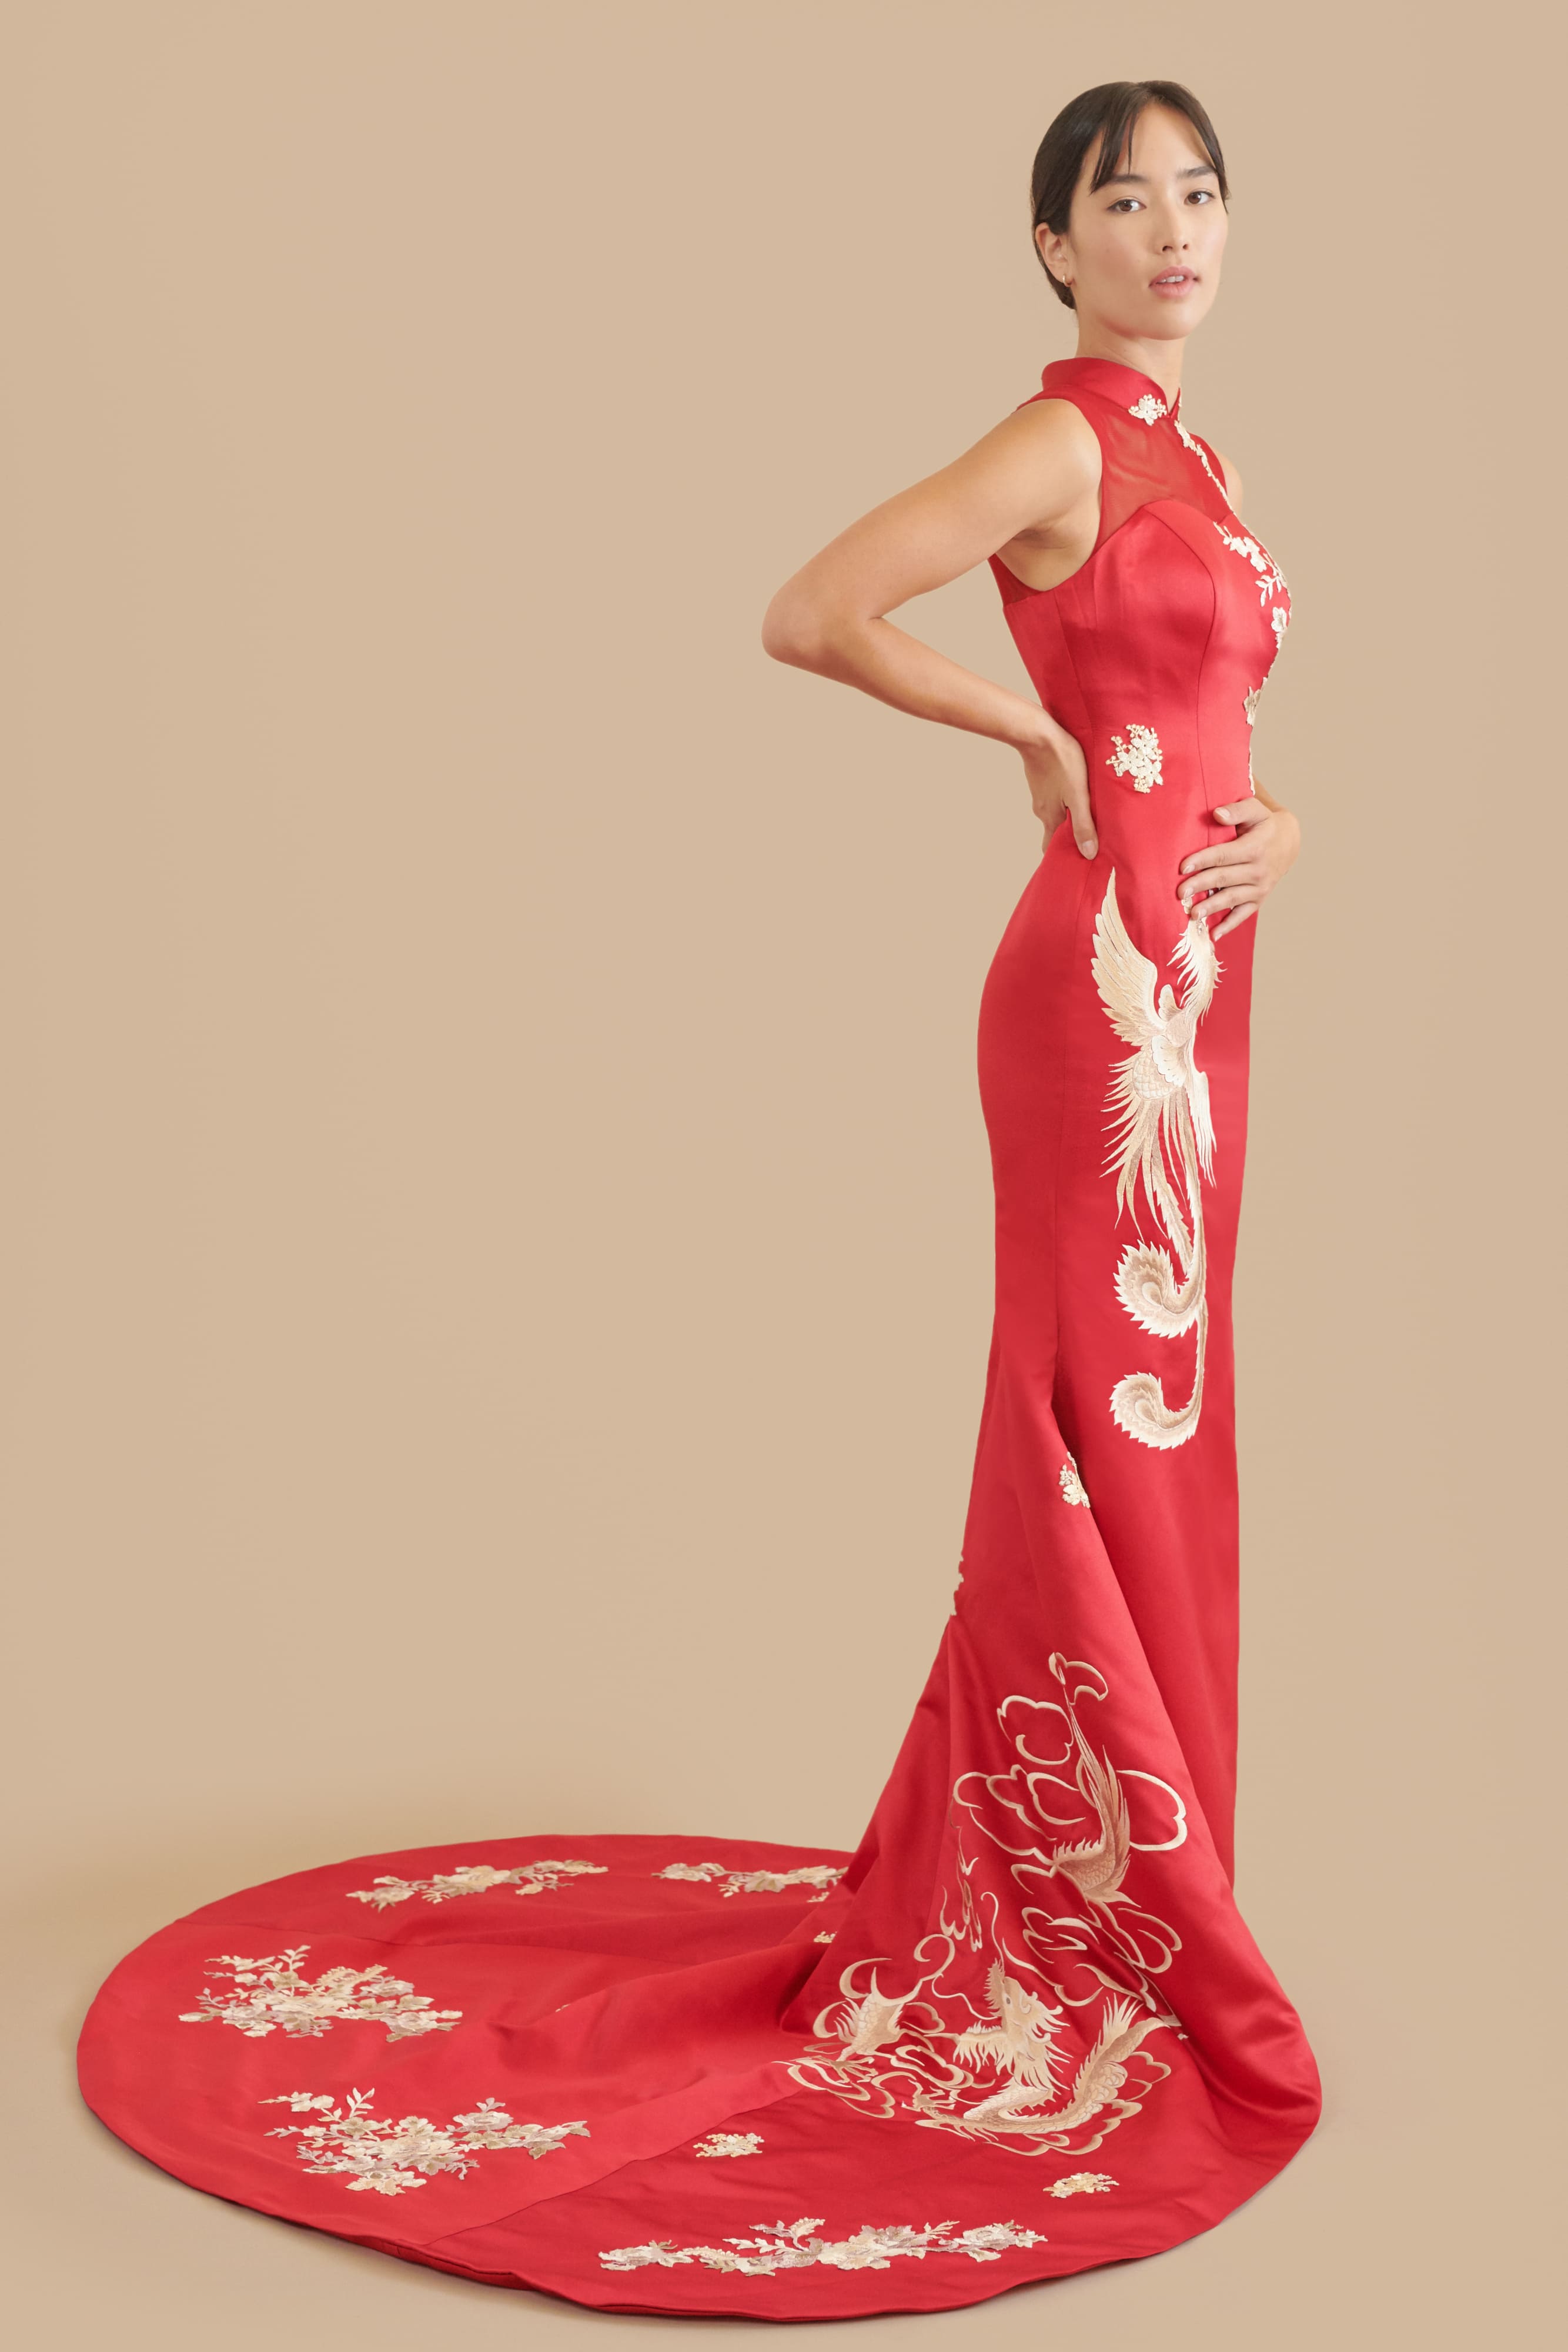 Chinese Dragon Motifs in Fashion  Vogue